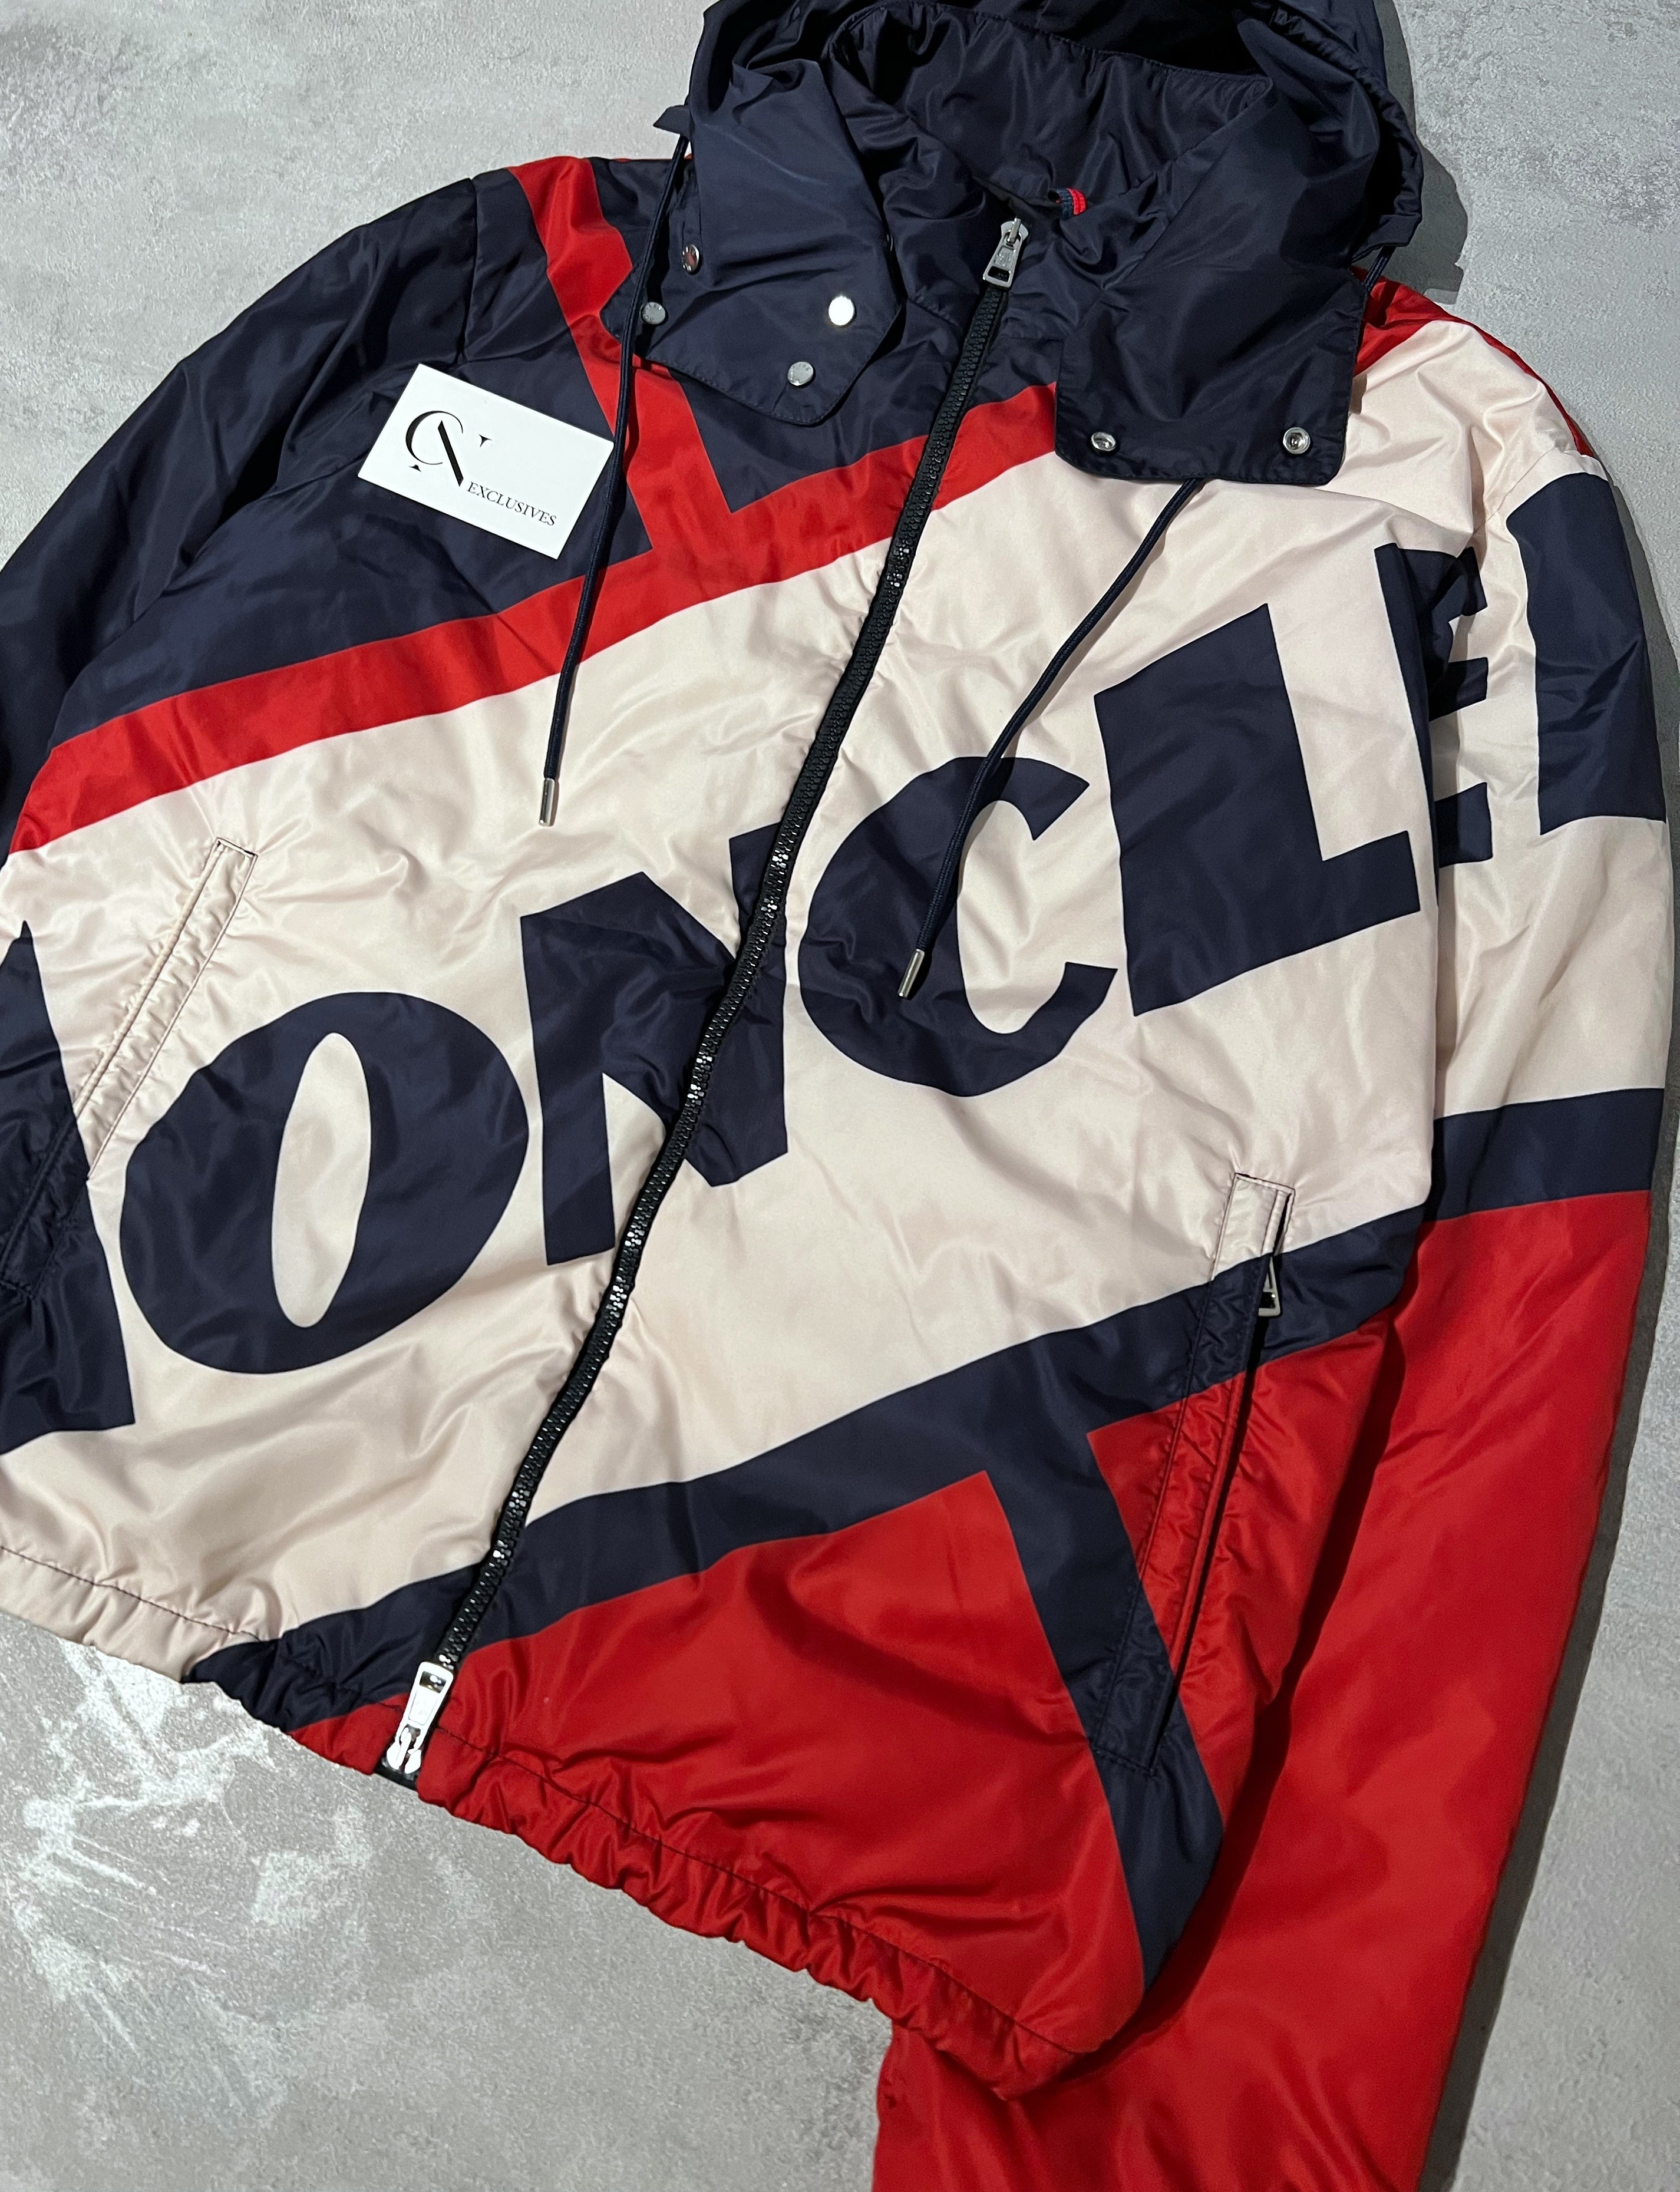 Moncler Bert Jacket - Size 3